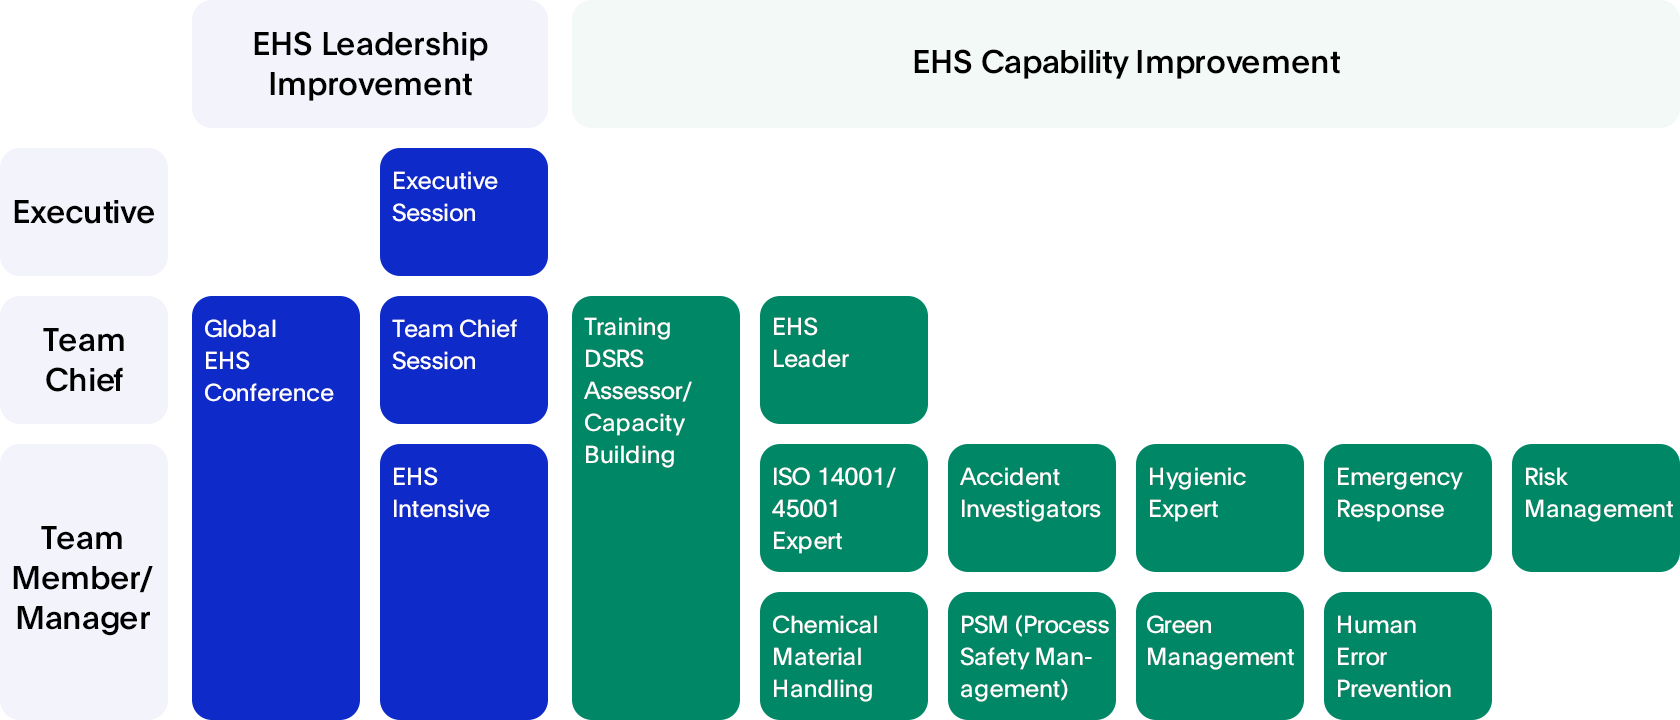 EHS Training Program Image – EHS Leadership Improvement, EHS Capability Improvement